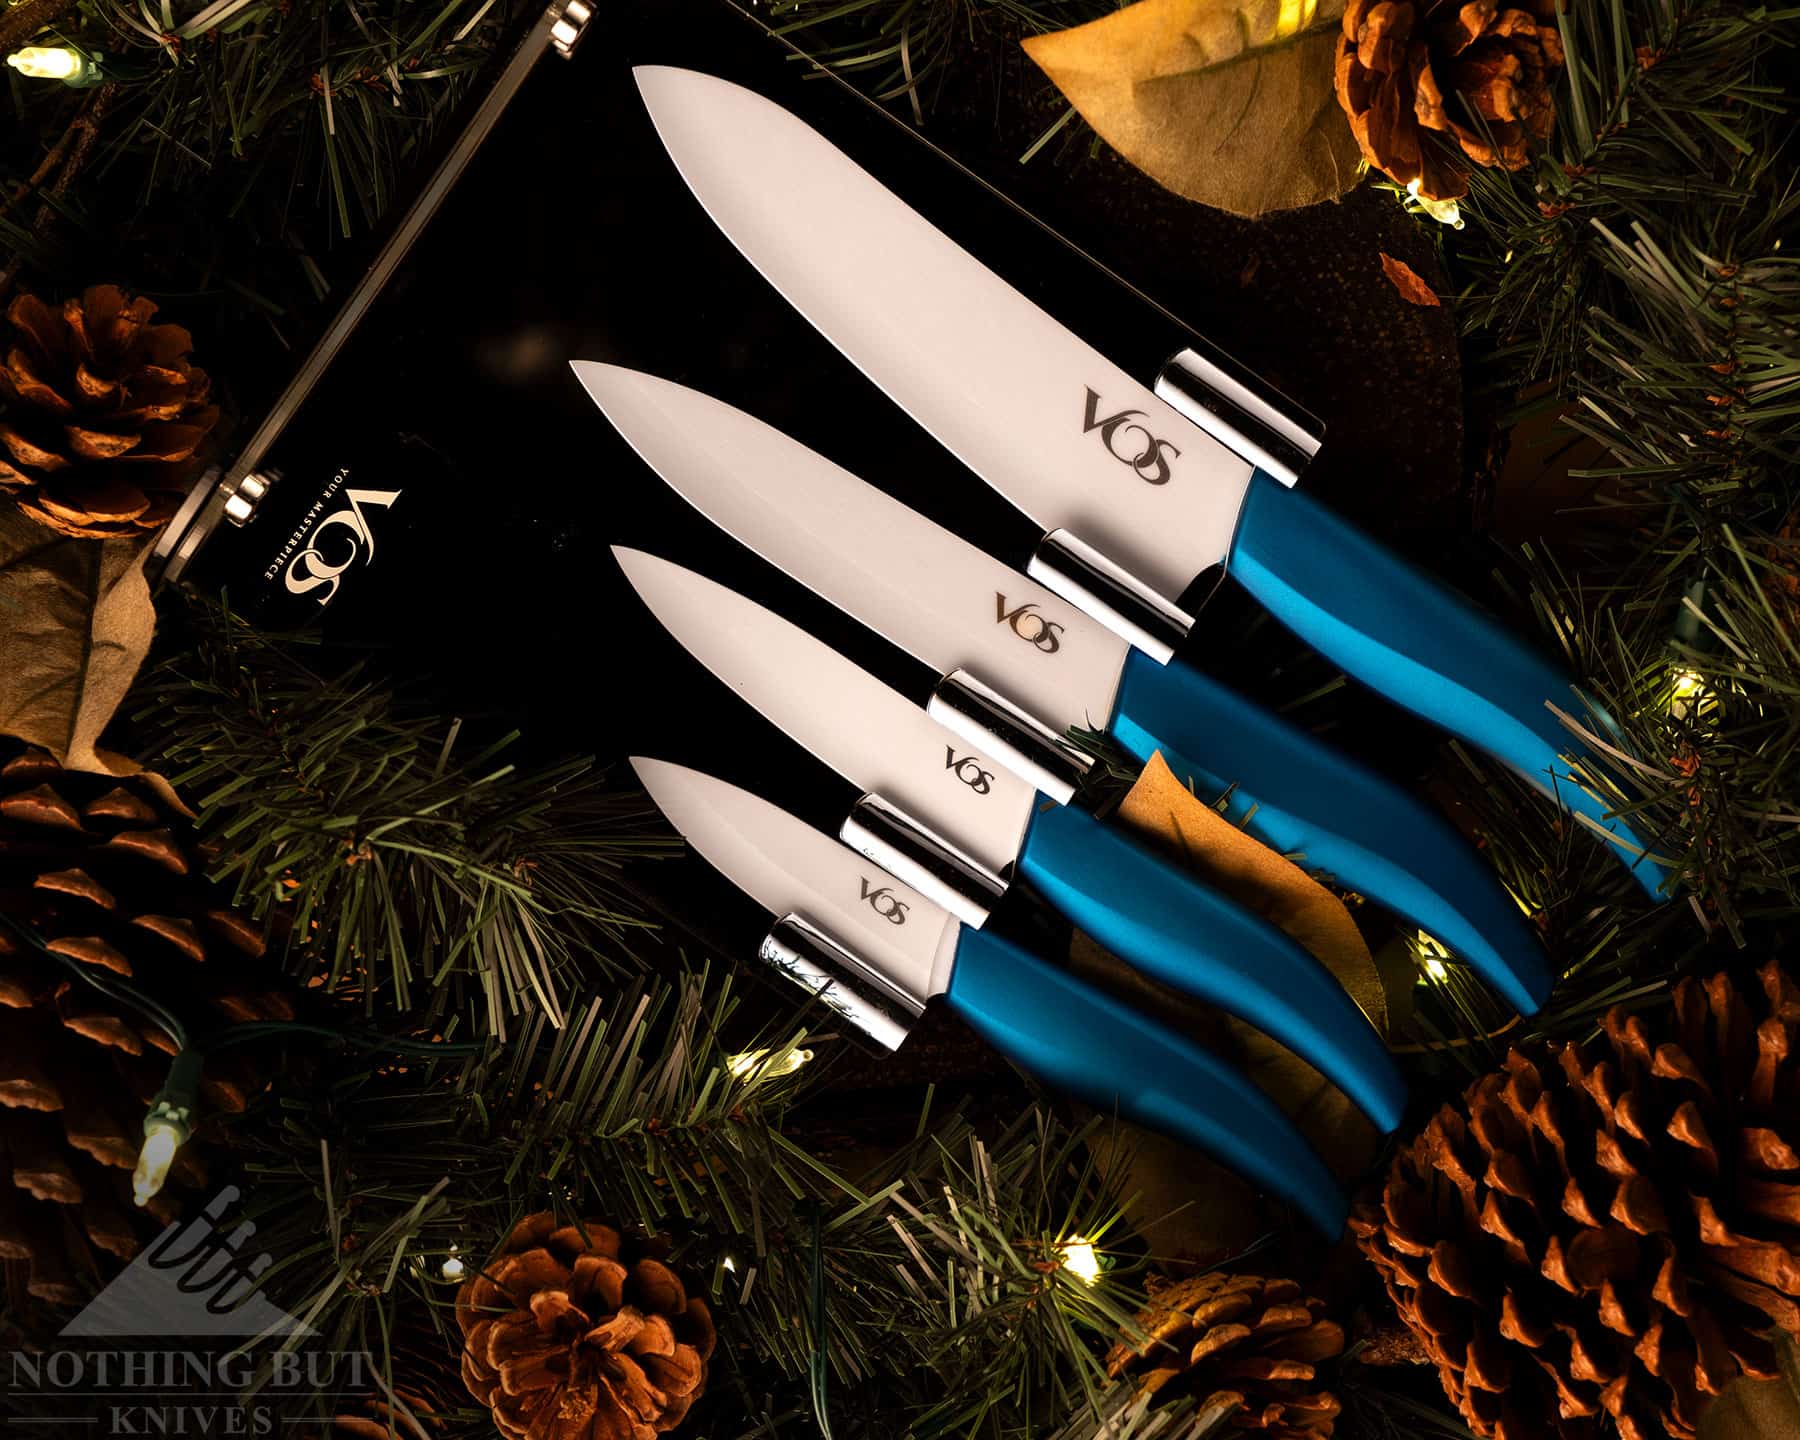 Vos Ceramic Knives with Block Holder - 4-Pc Kitchen Knife Set for